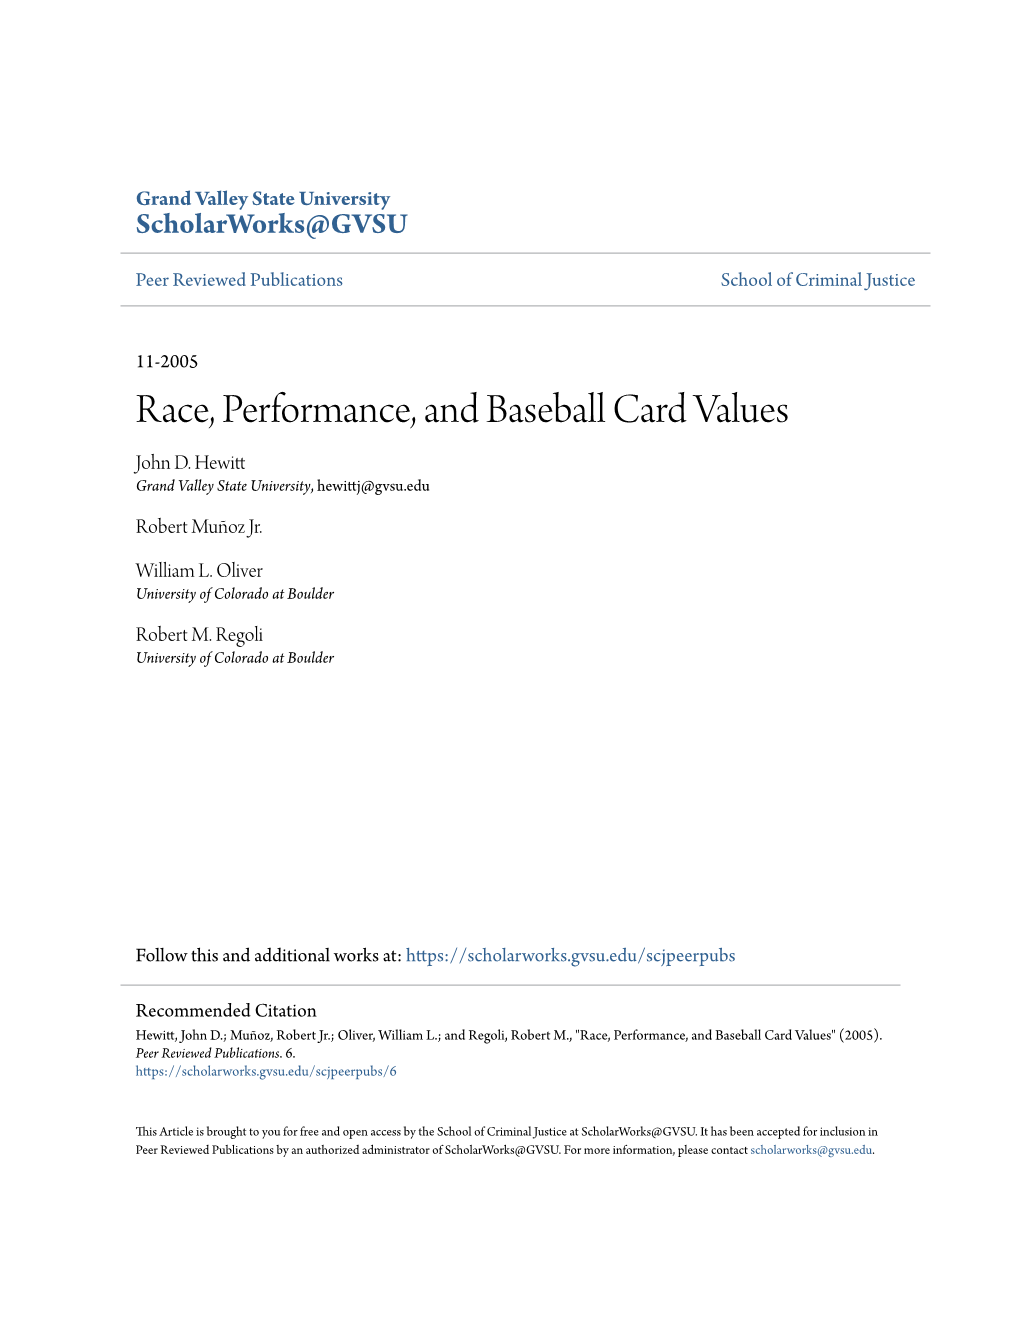 Race, Performance, and Baseball Card Values John D